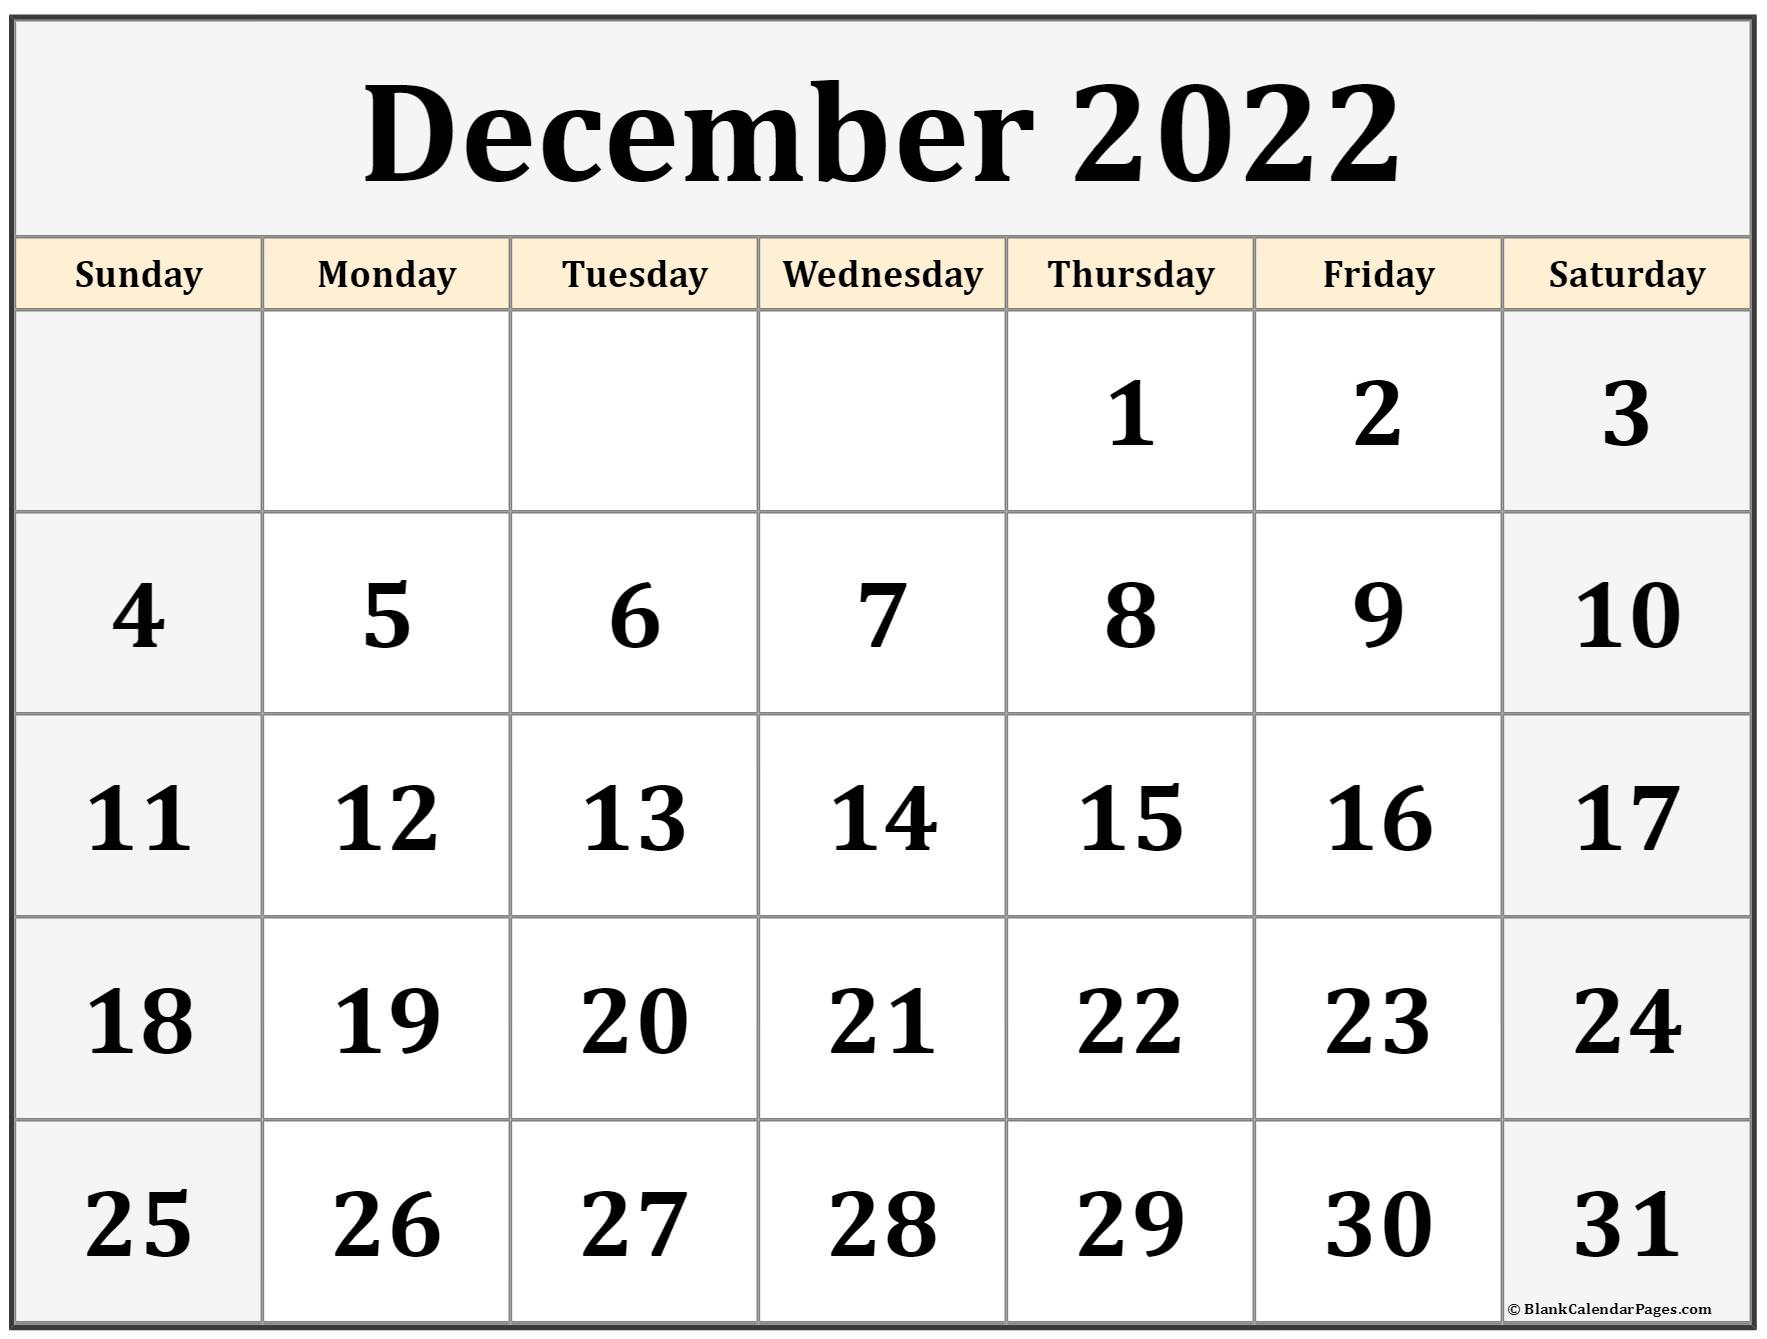 December 2022 Calendar | Free Printable Calendar Templates Printable December Calendar With Holidays